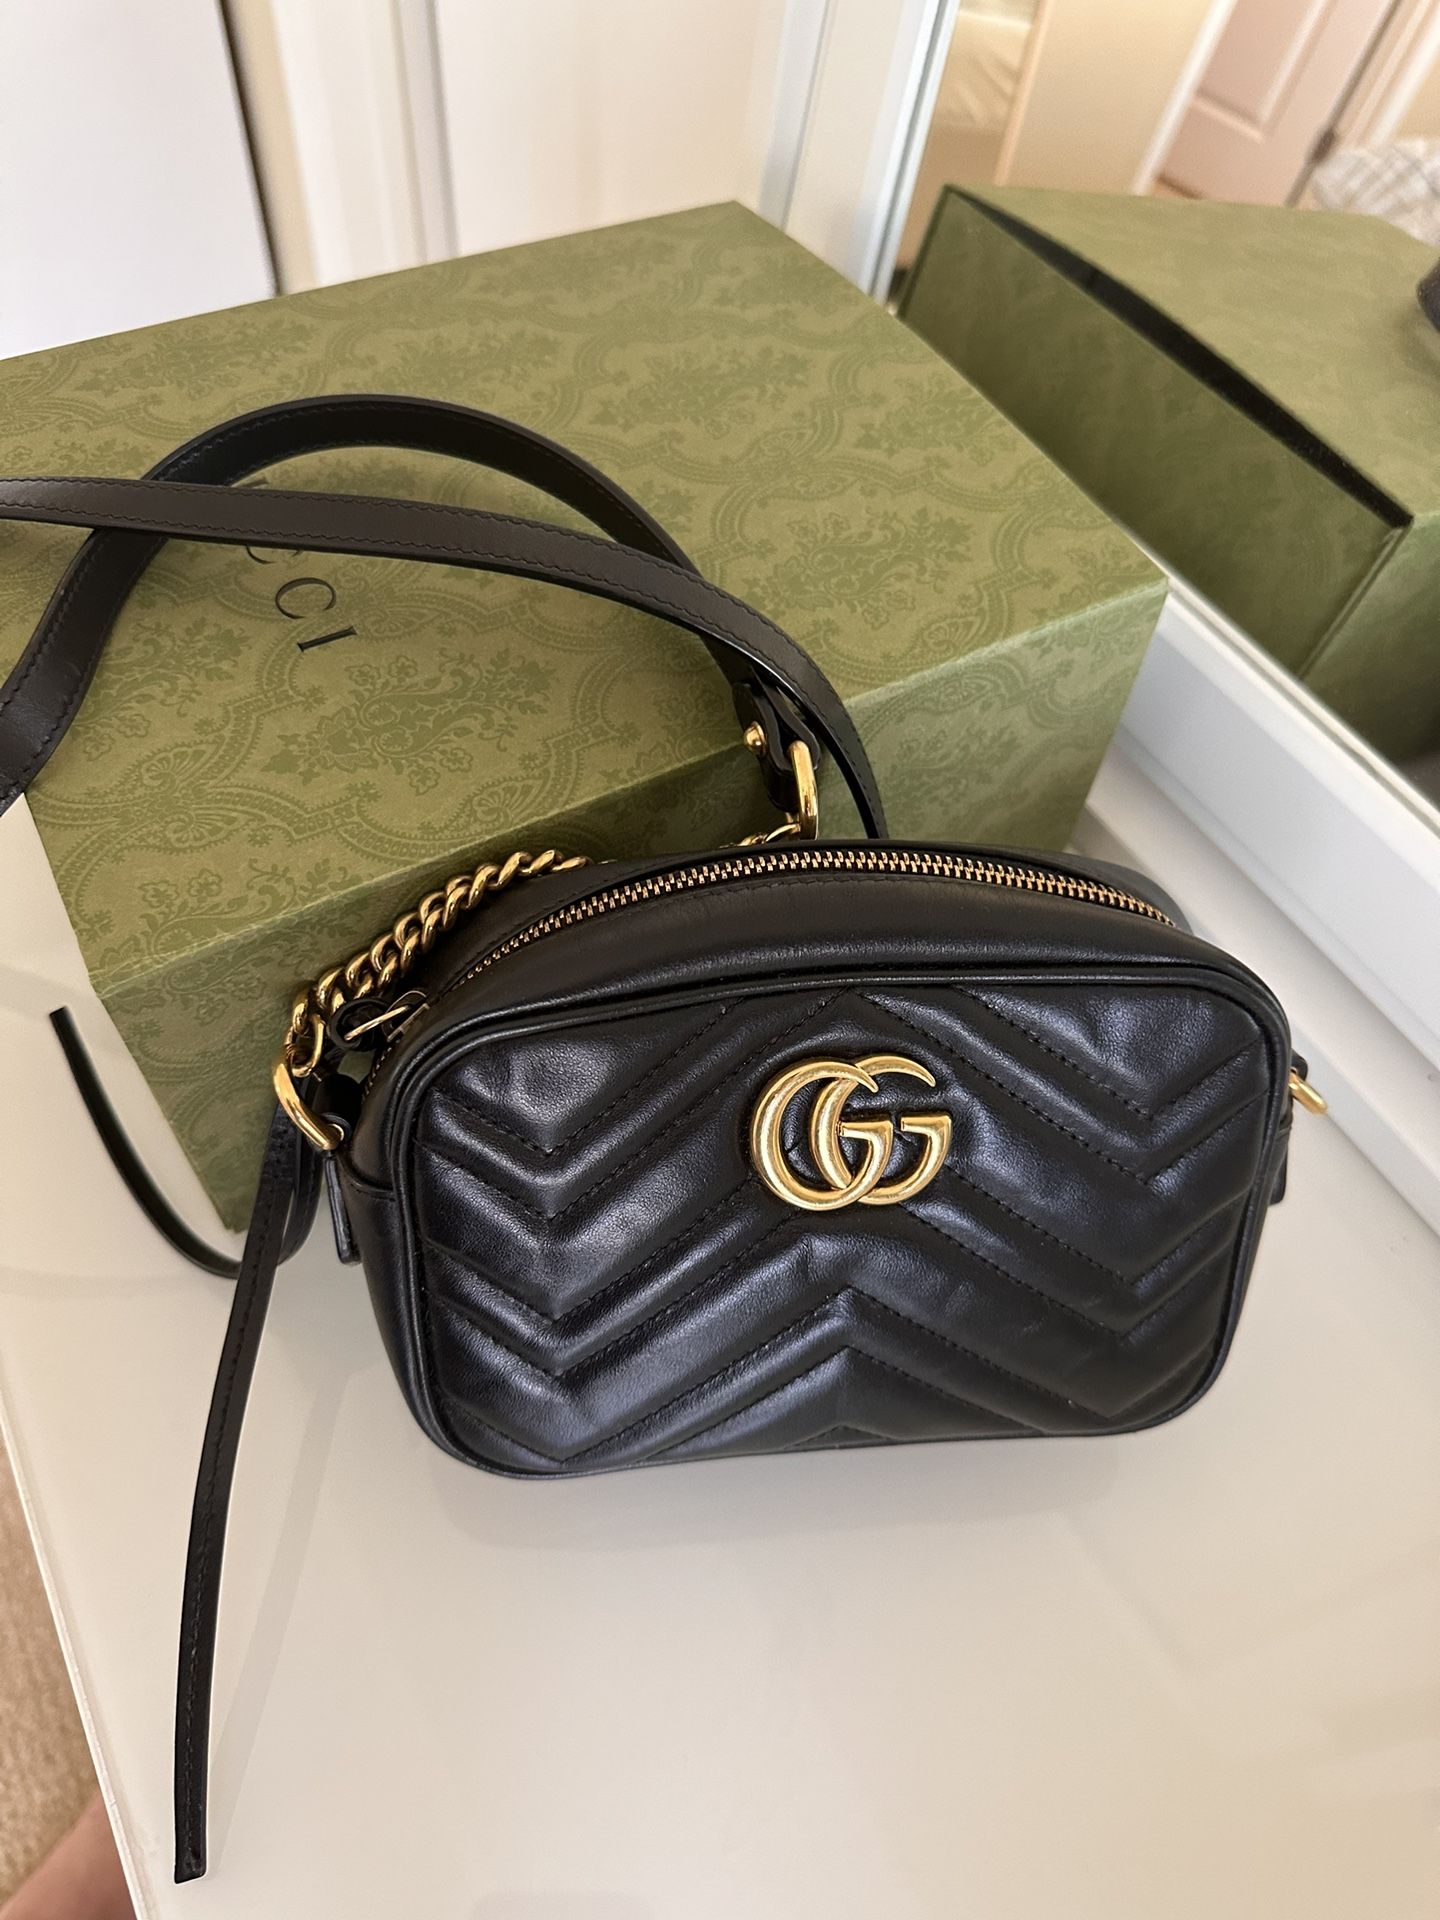 Gucci Marymount bag 